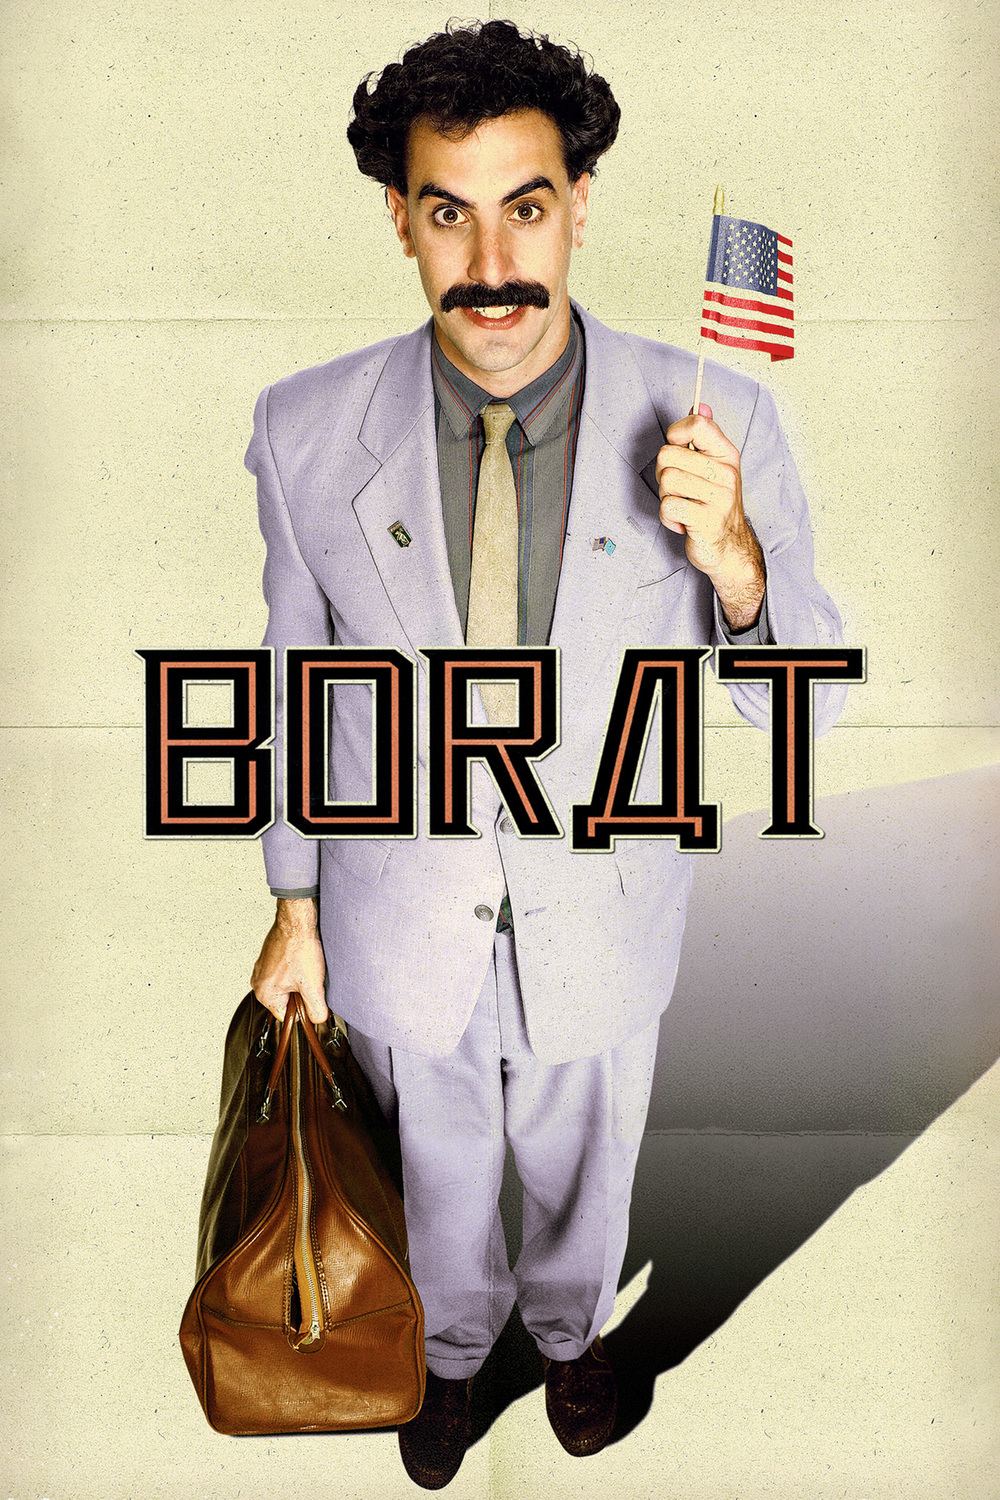 Borat - Nakoukání do amerycké kultůry na obědnávku slavnoj kazašskoj národu | Fandíme filmu